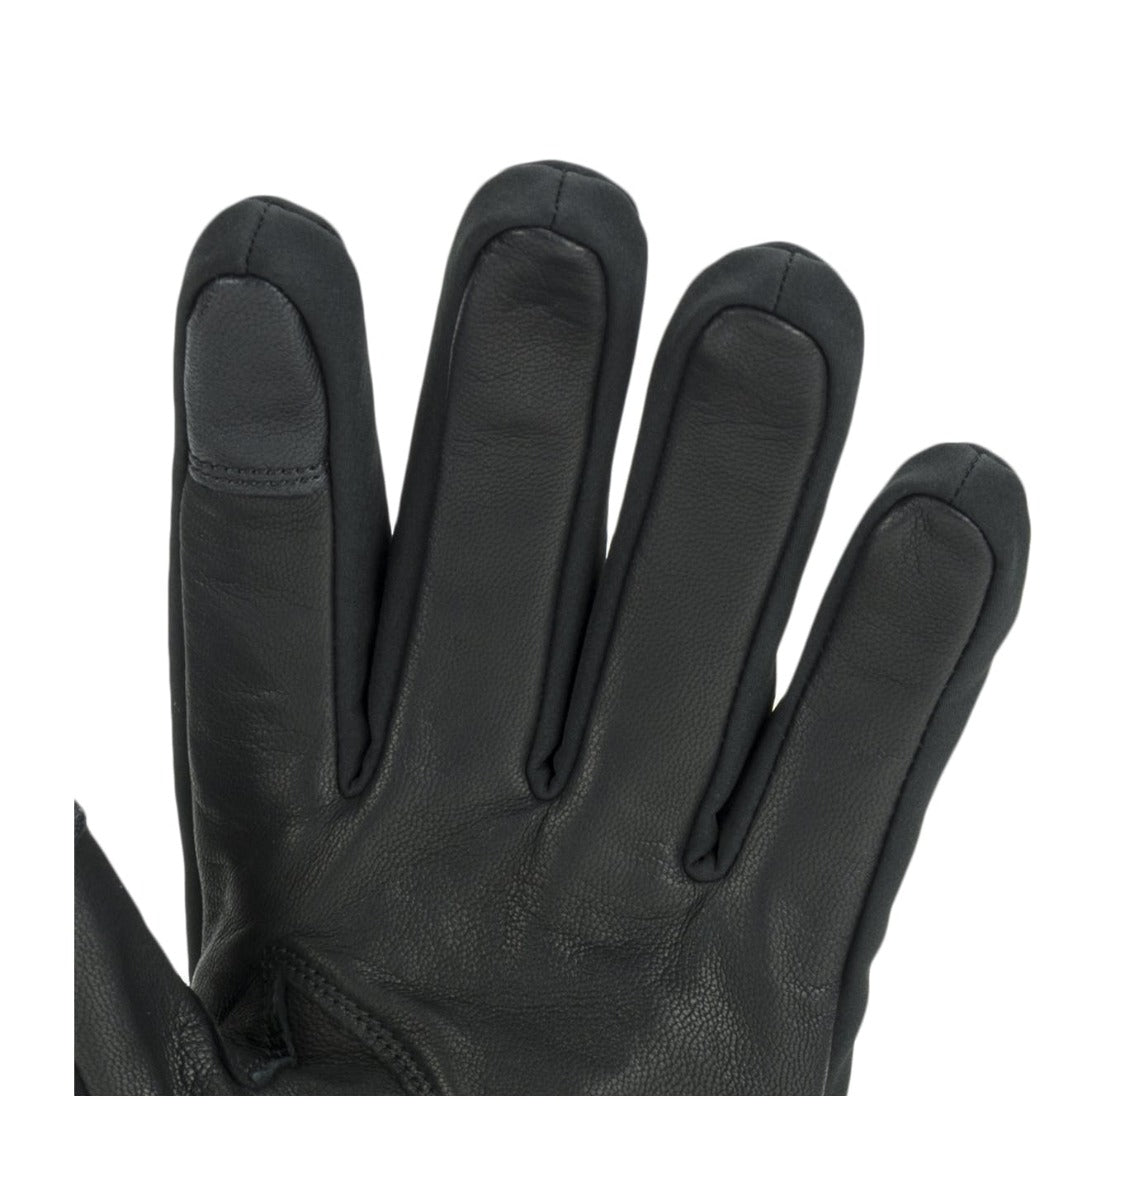 Sealskinz Waterproof All Weather Insulated Glove